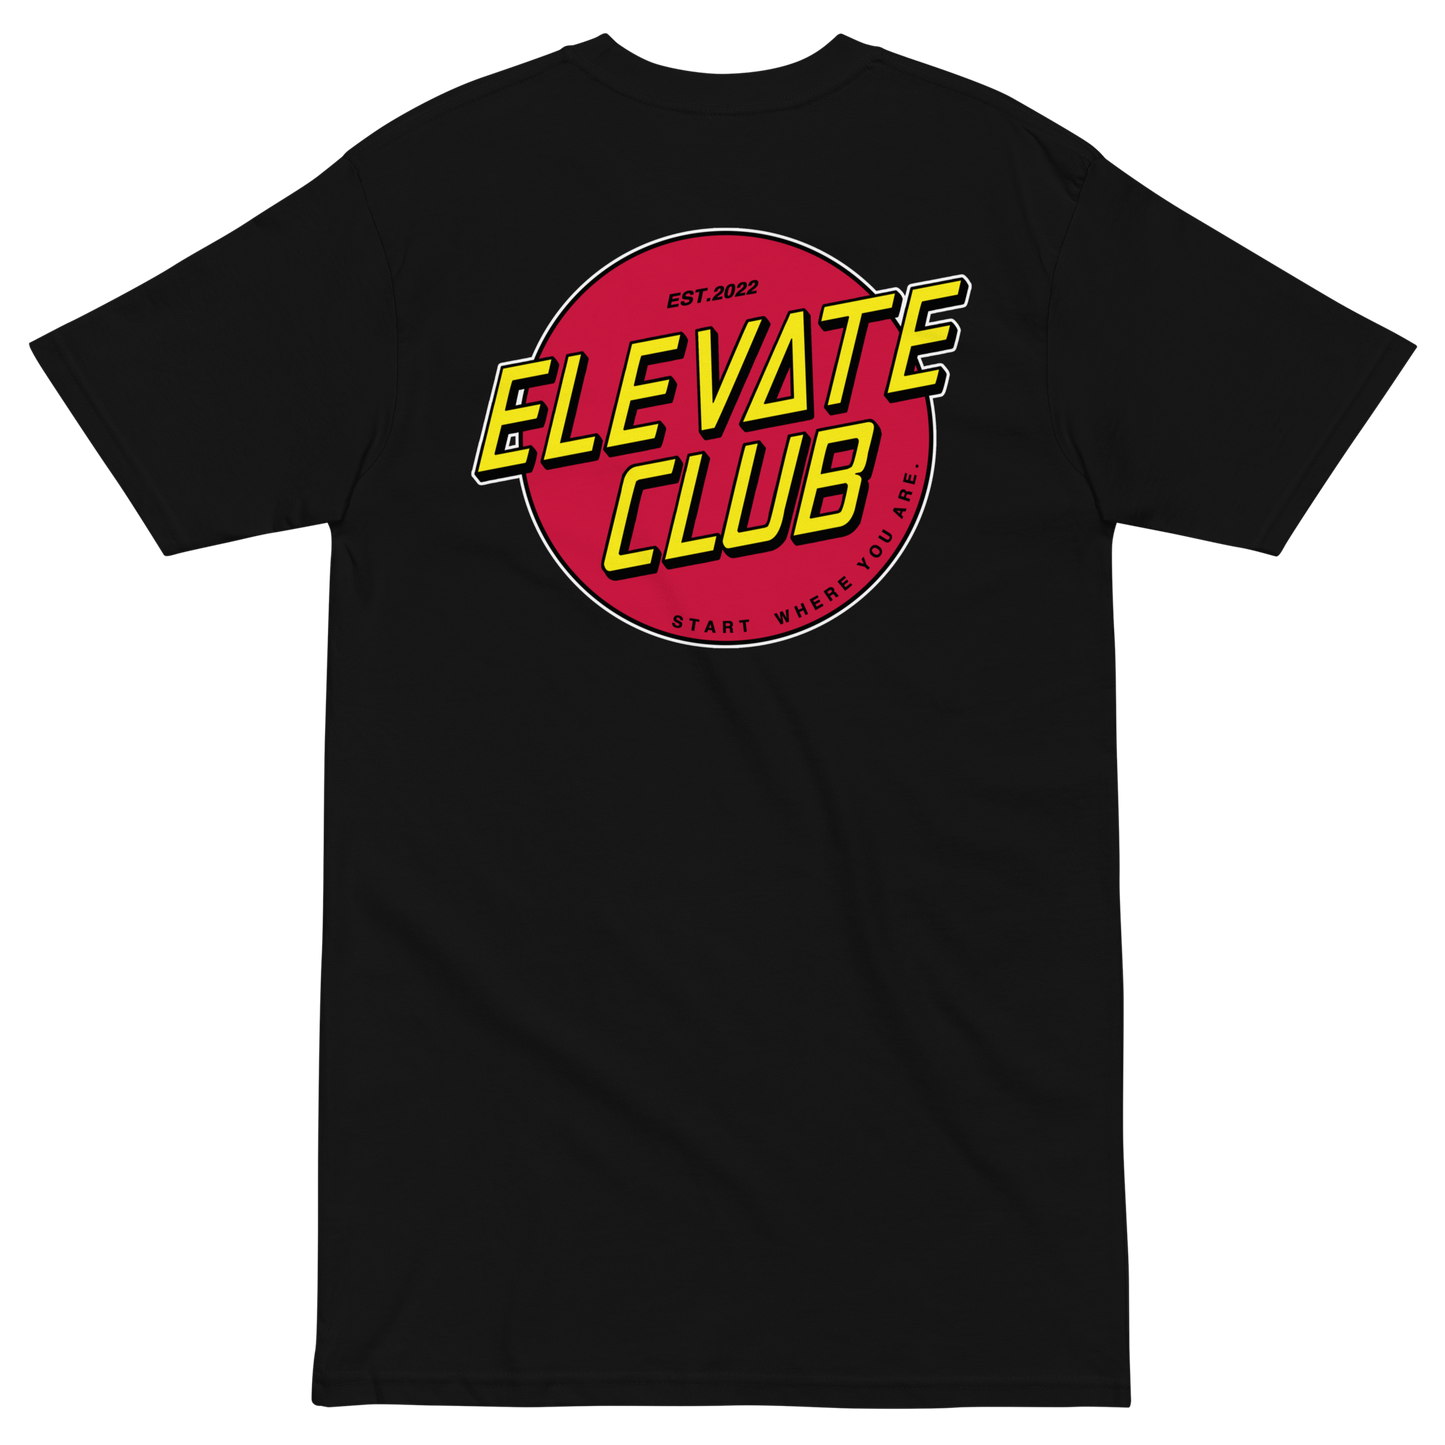 "ELEVATE CRUZ" - T-Shirt (Black)